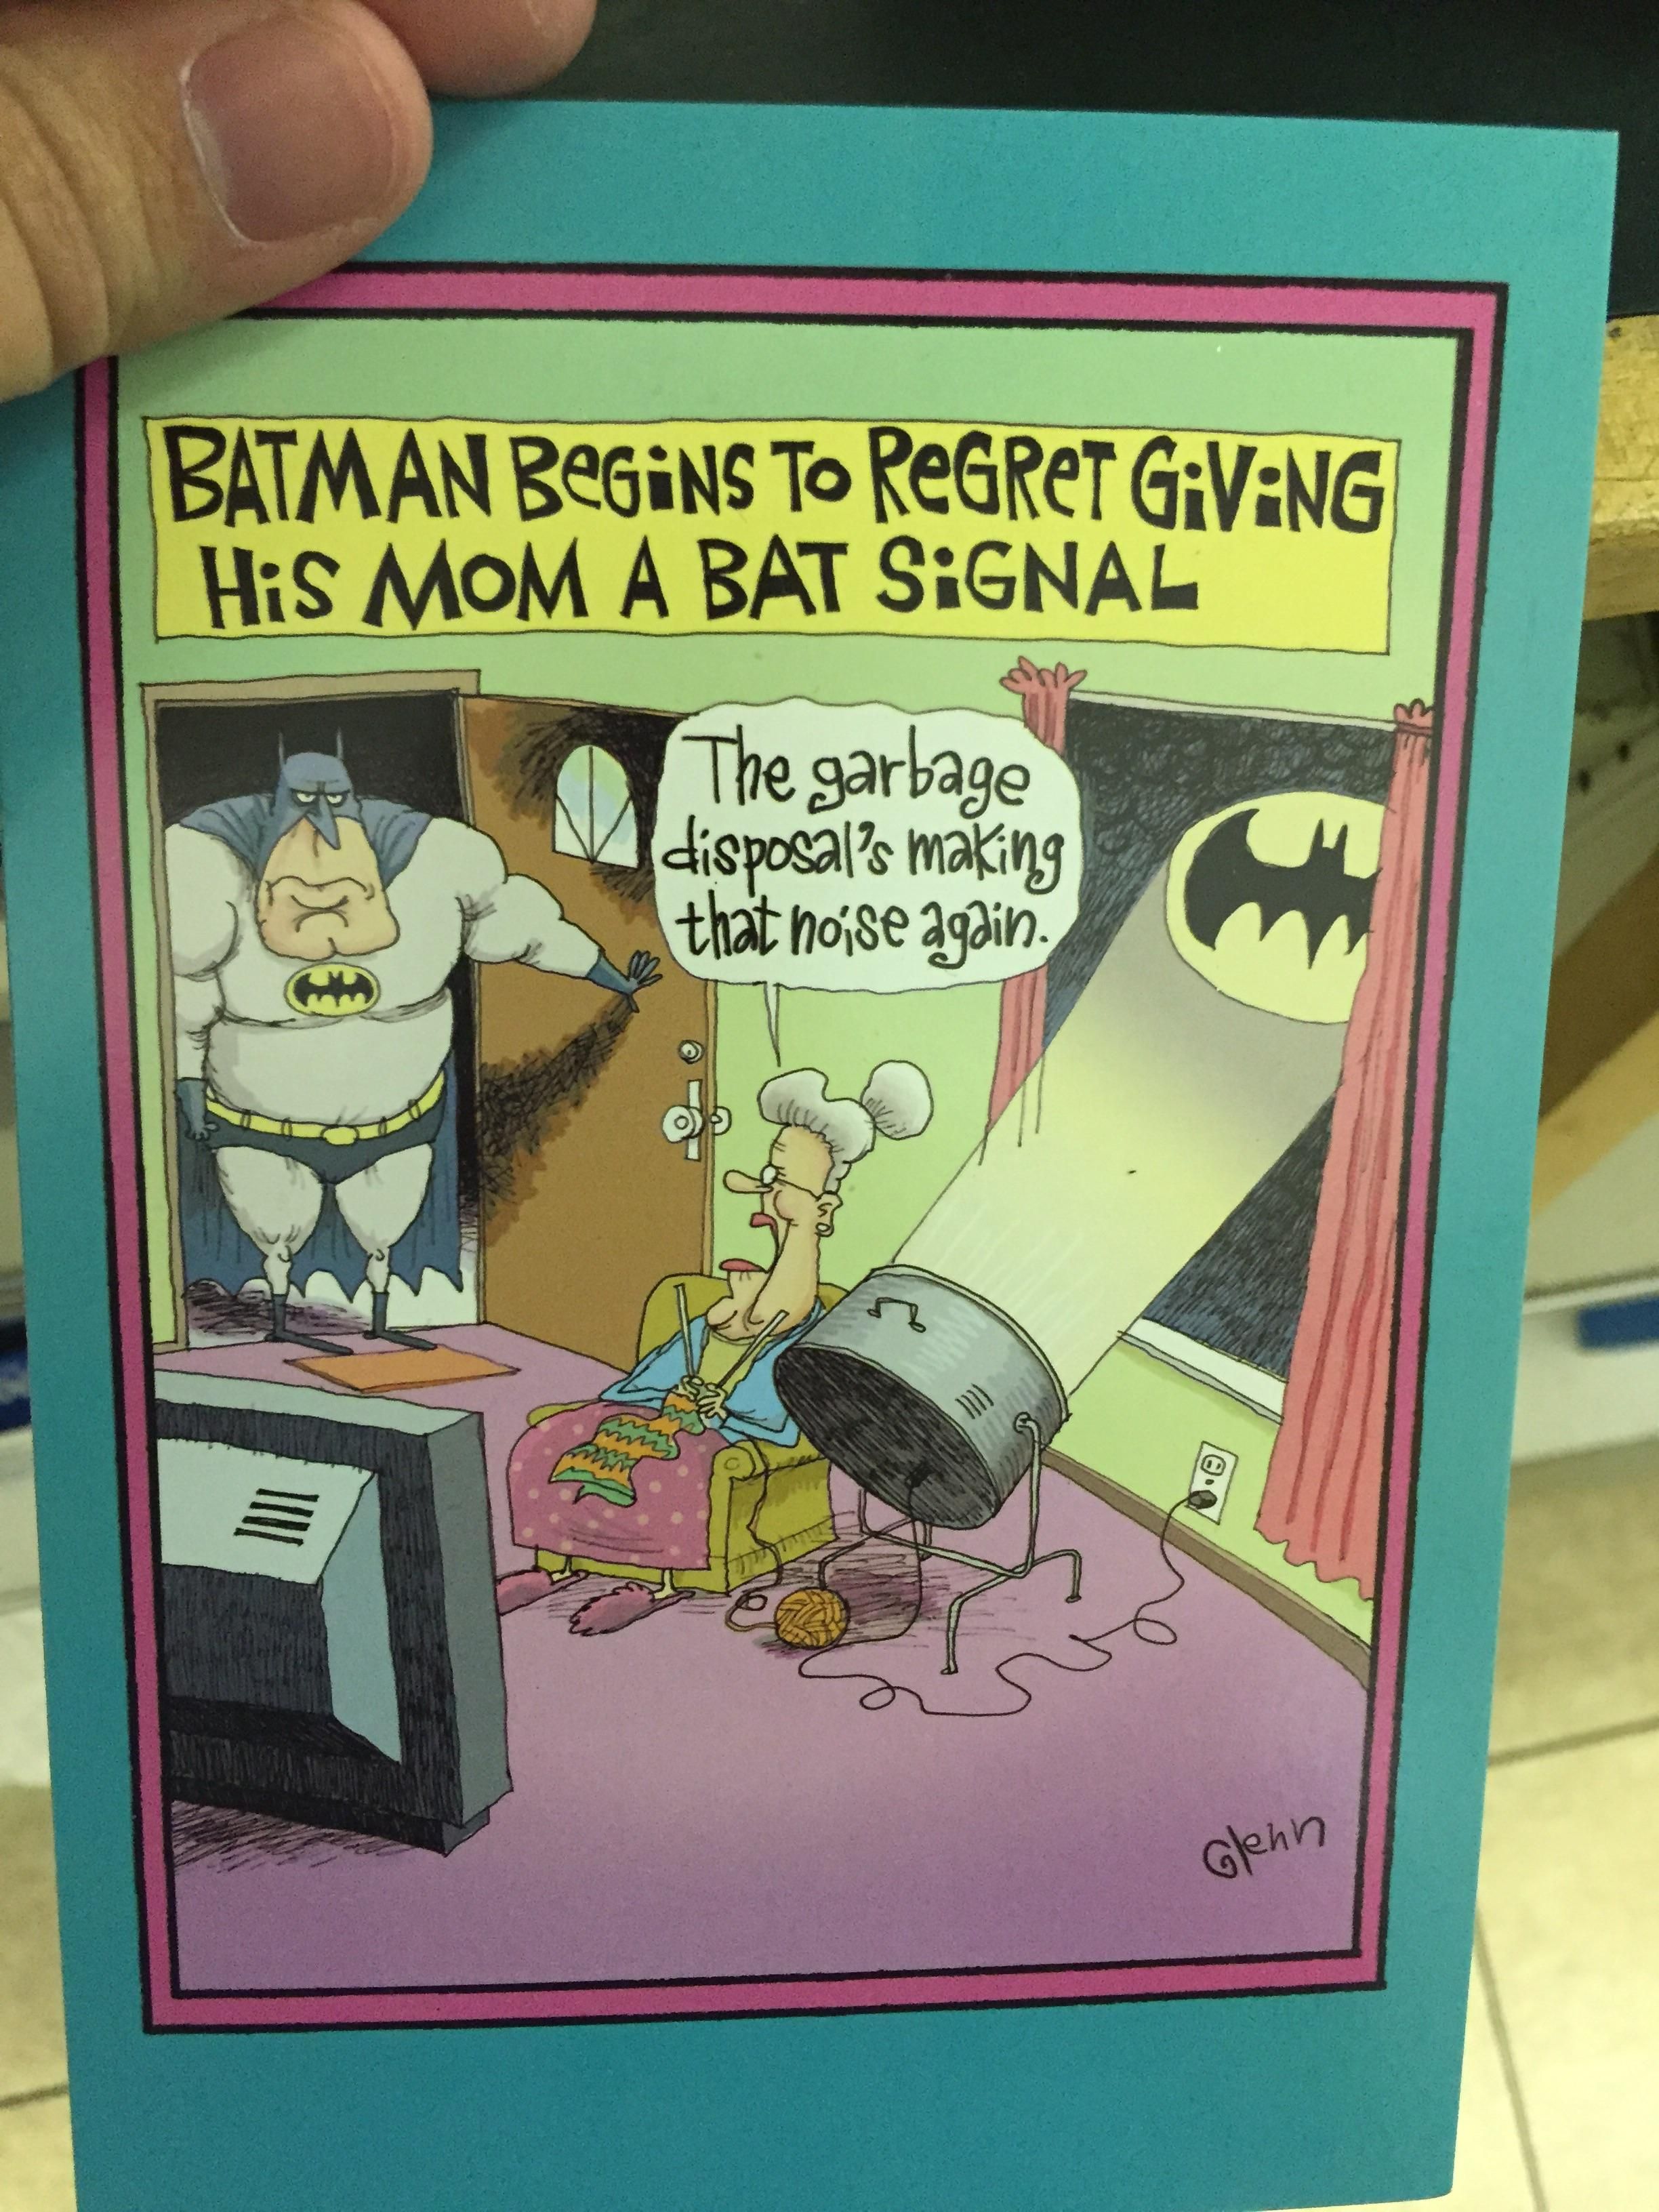 The artist of this cartoon forgot an important detail about Batman's origins...